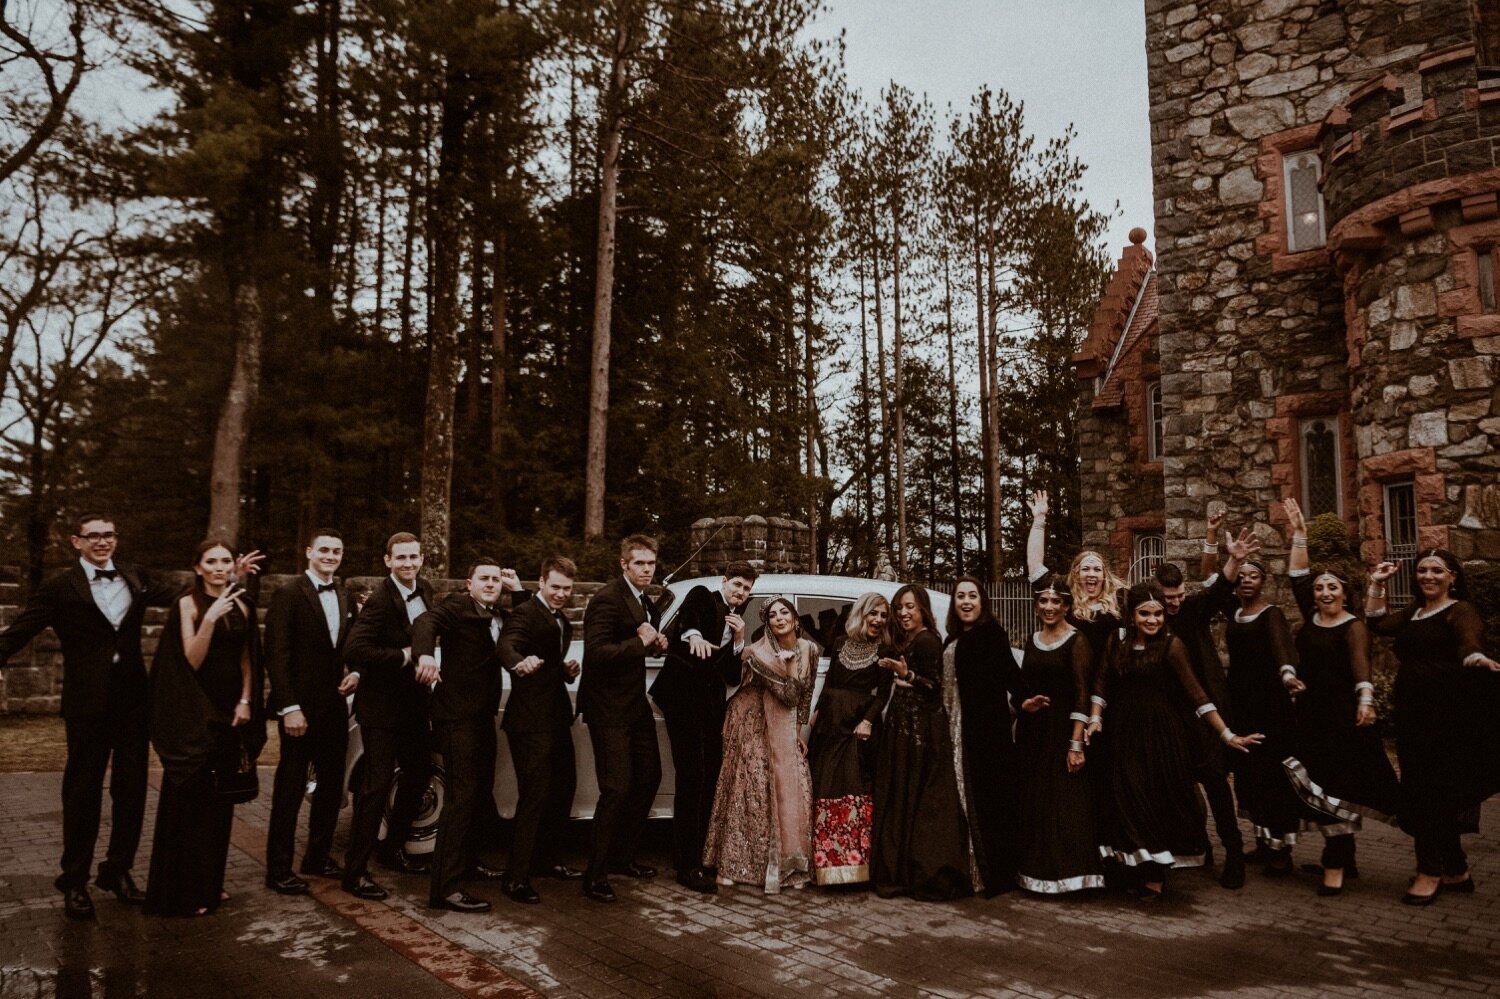 043_042019-zoya+jordan-wedding-274_Desi+Wedding+at+the+Searles+Castle+in+New+Hampshire+.jpg